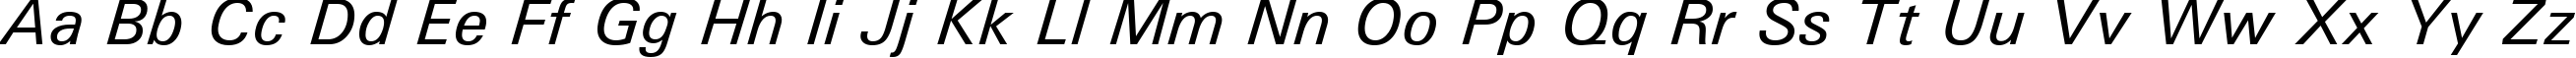 Пример написания английского алфавита шрифтом Univers Medium Italic